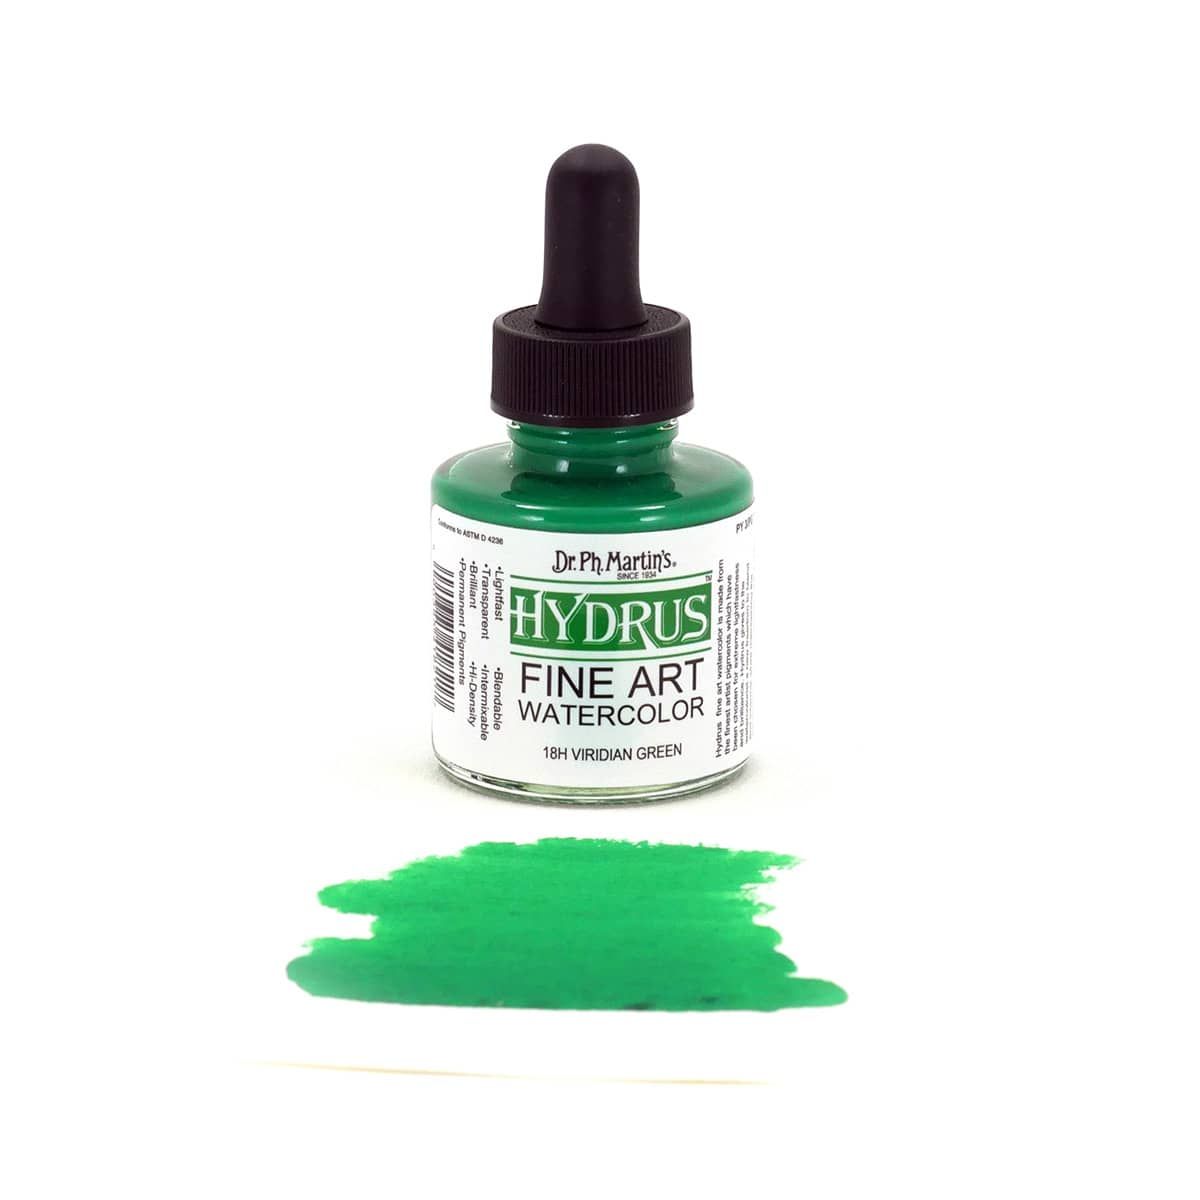 Hydrus Watercolor 1 oz Bottle - Viridian Green